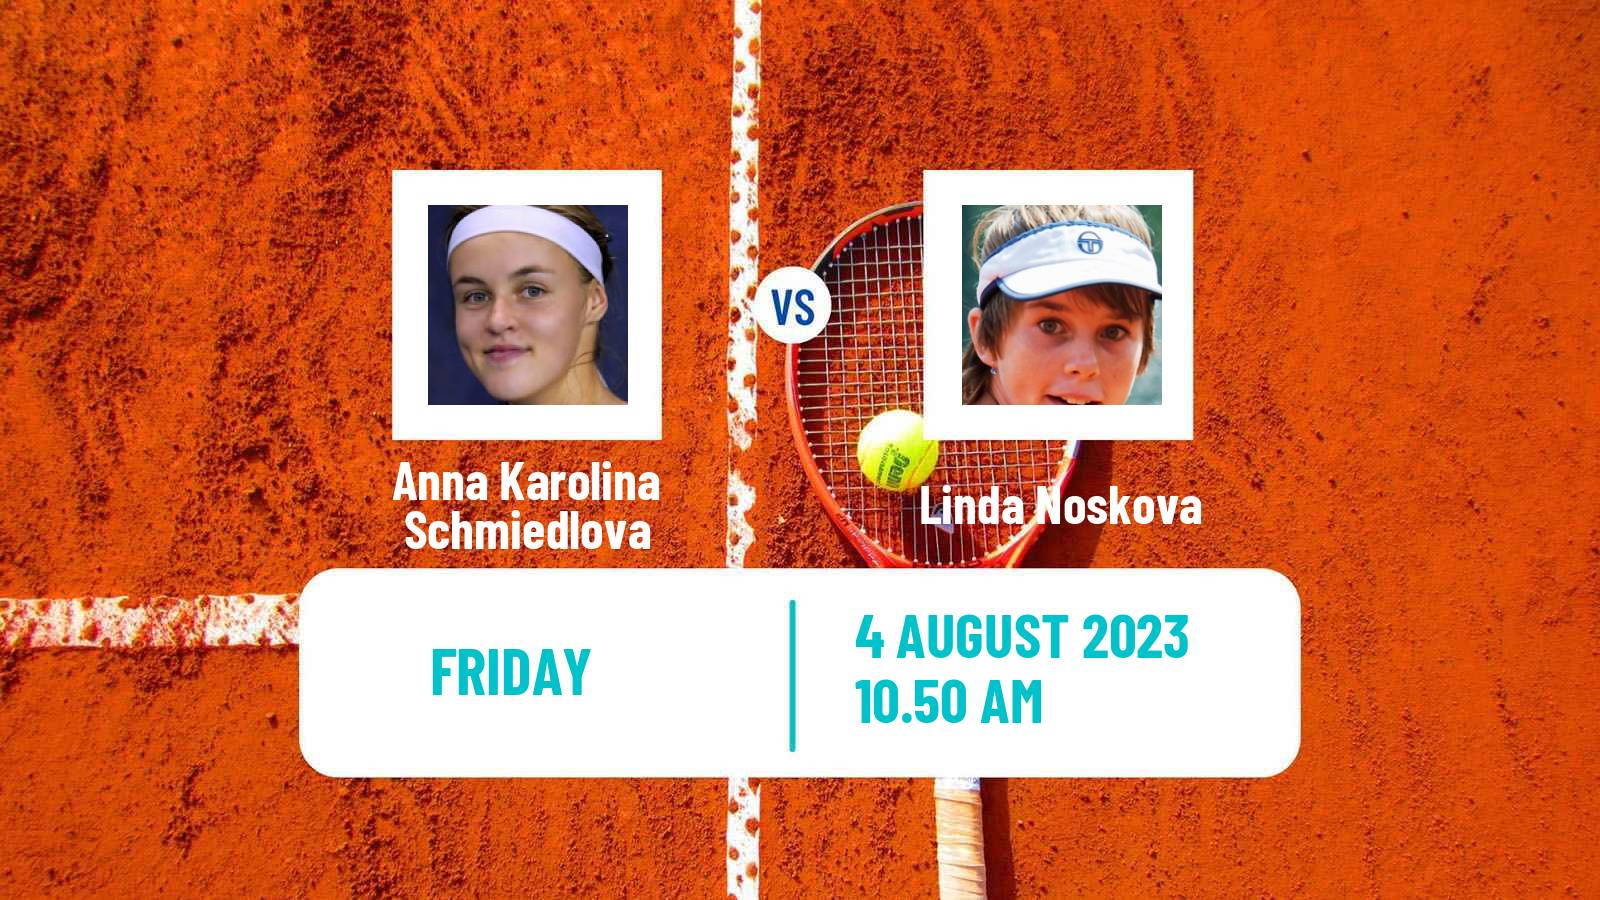 Tennis WTA Prague Anna Karolina Schmiedlova - Linda Noskova